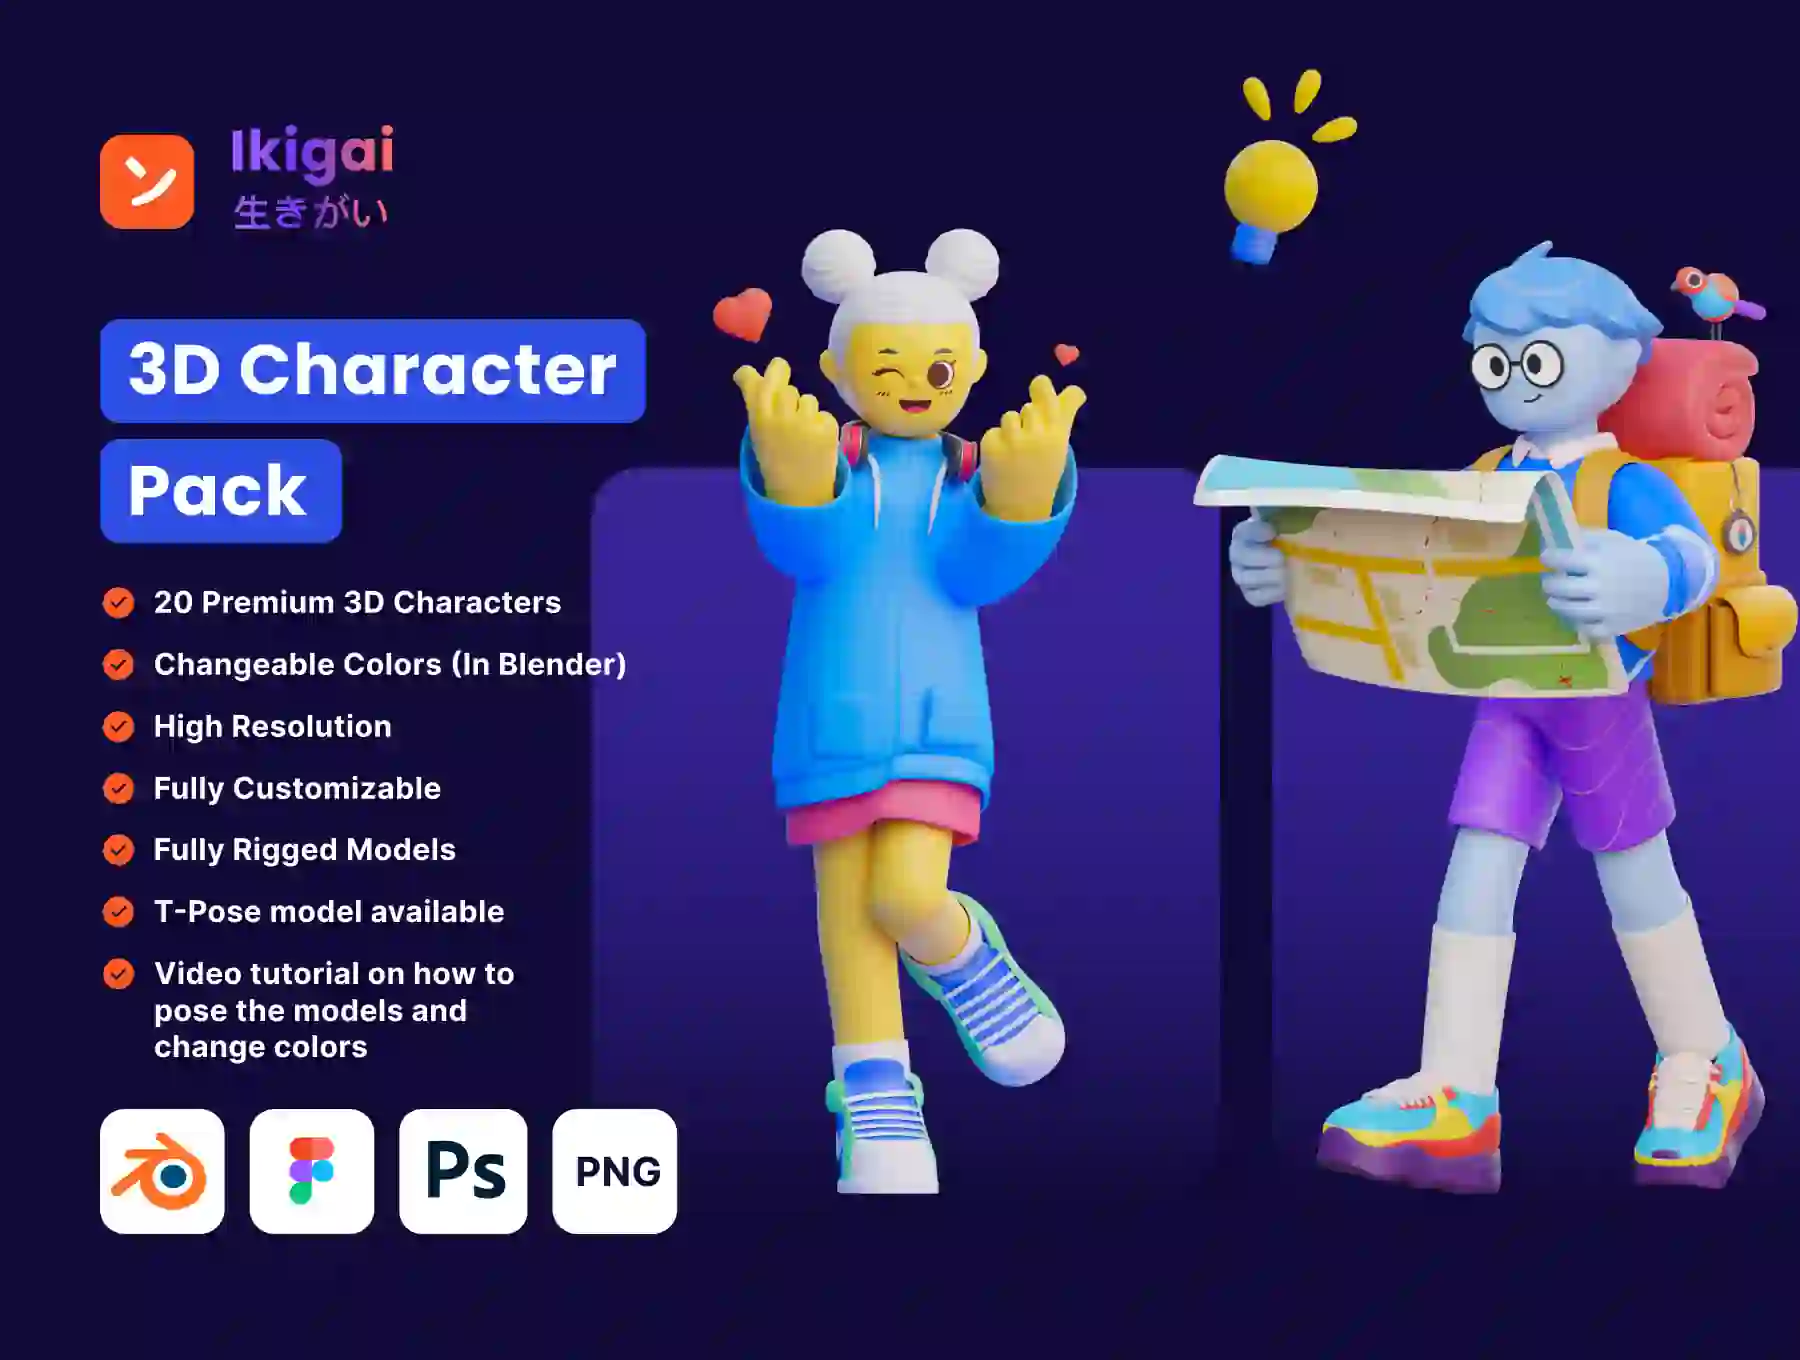 Ikigai - 3D Character Pack